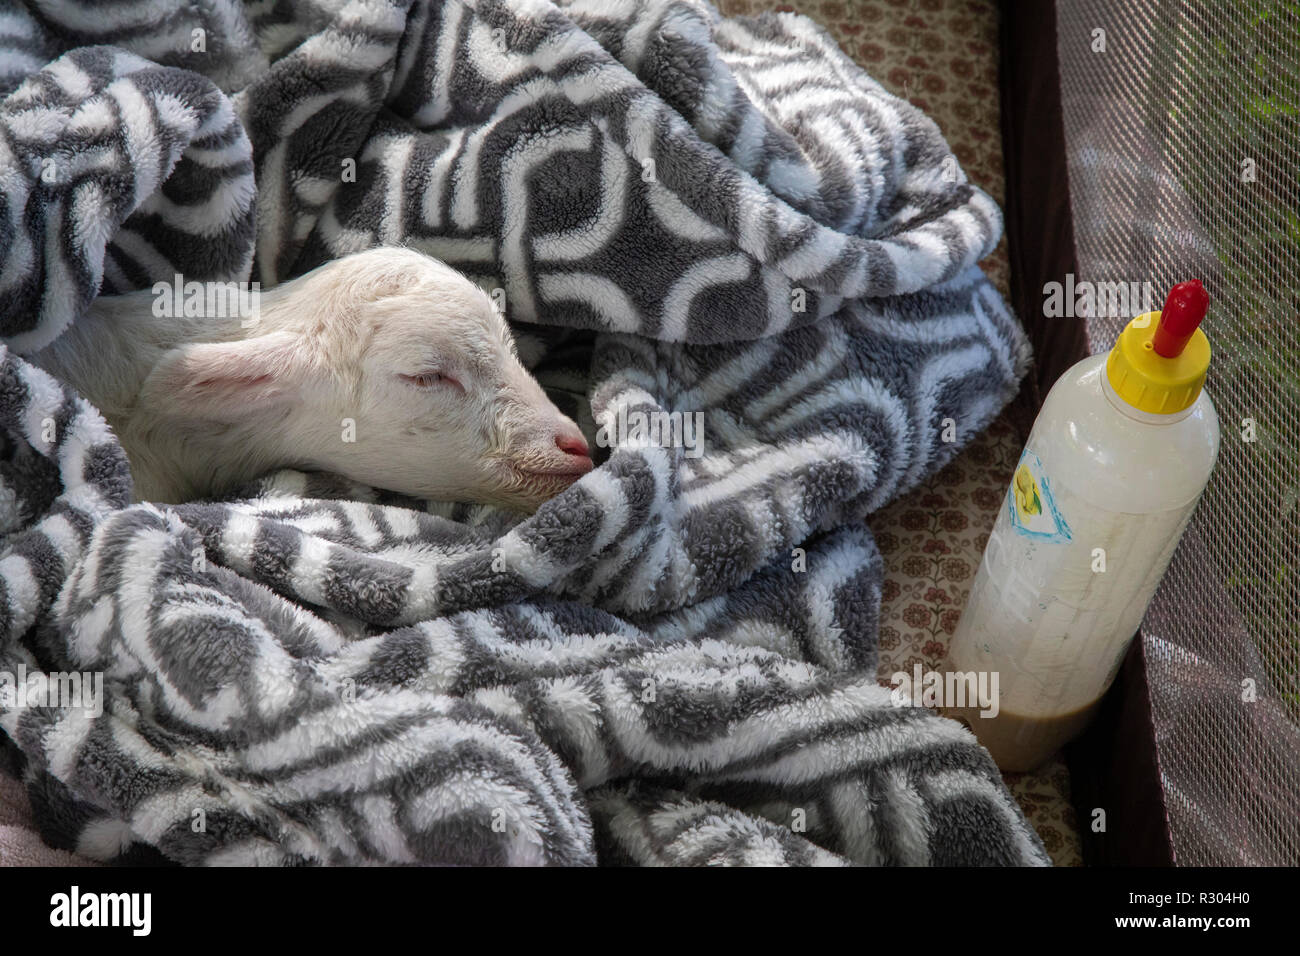 Kealakekua, Hawaii - A newborn lamb, wrapped in a blanket, with a bottle. Stock Photo